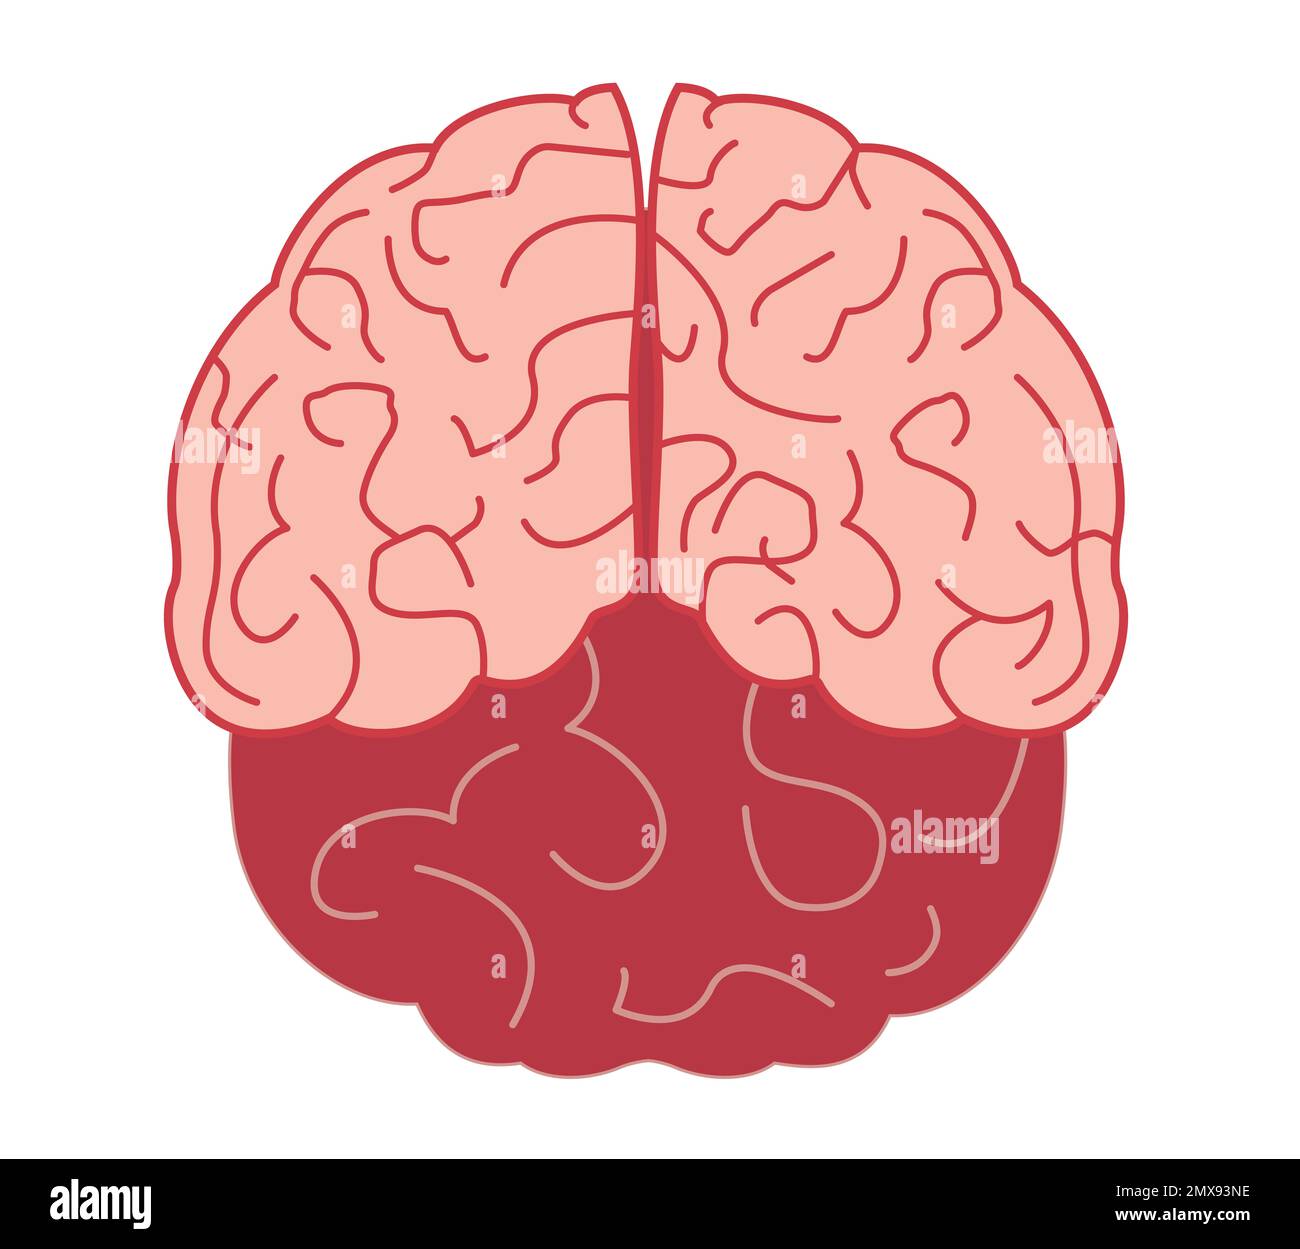 Illustration of human brain on white background Stock Photo